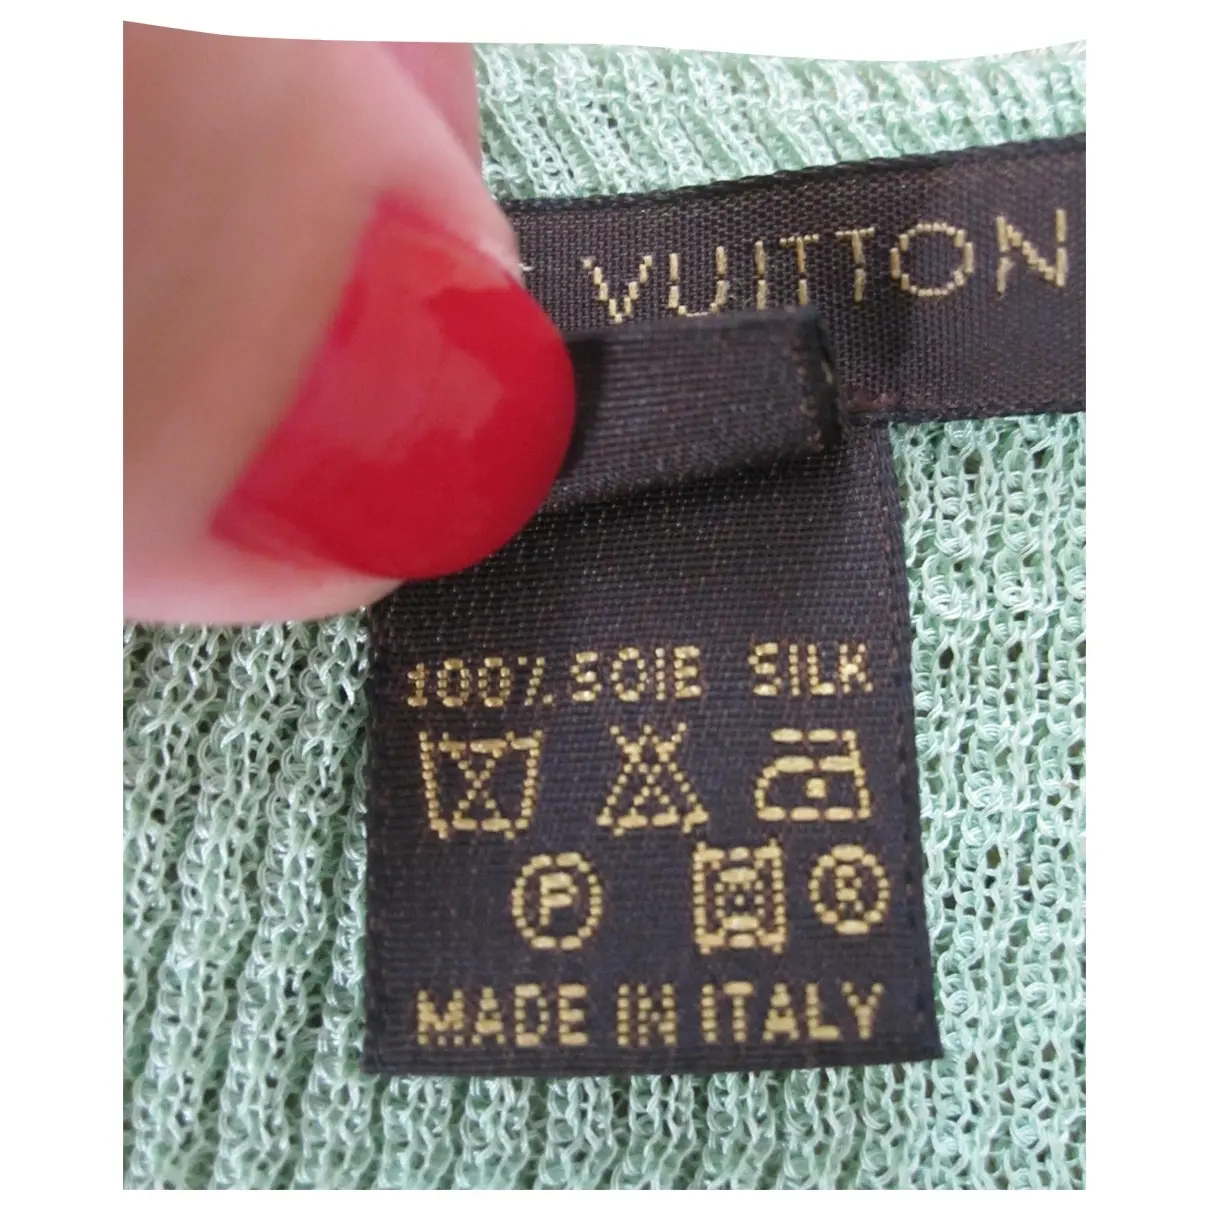 Buy Louis Vuitton Green Silk Top online